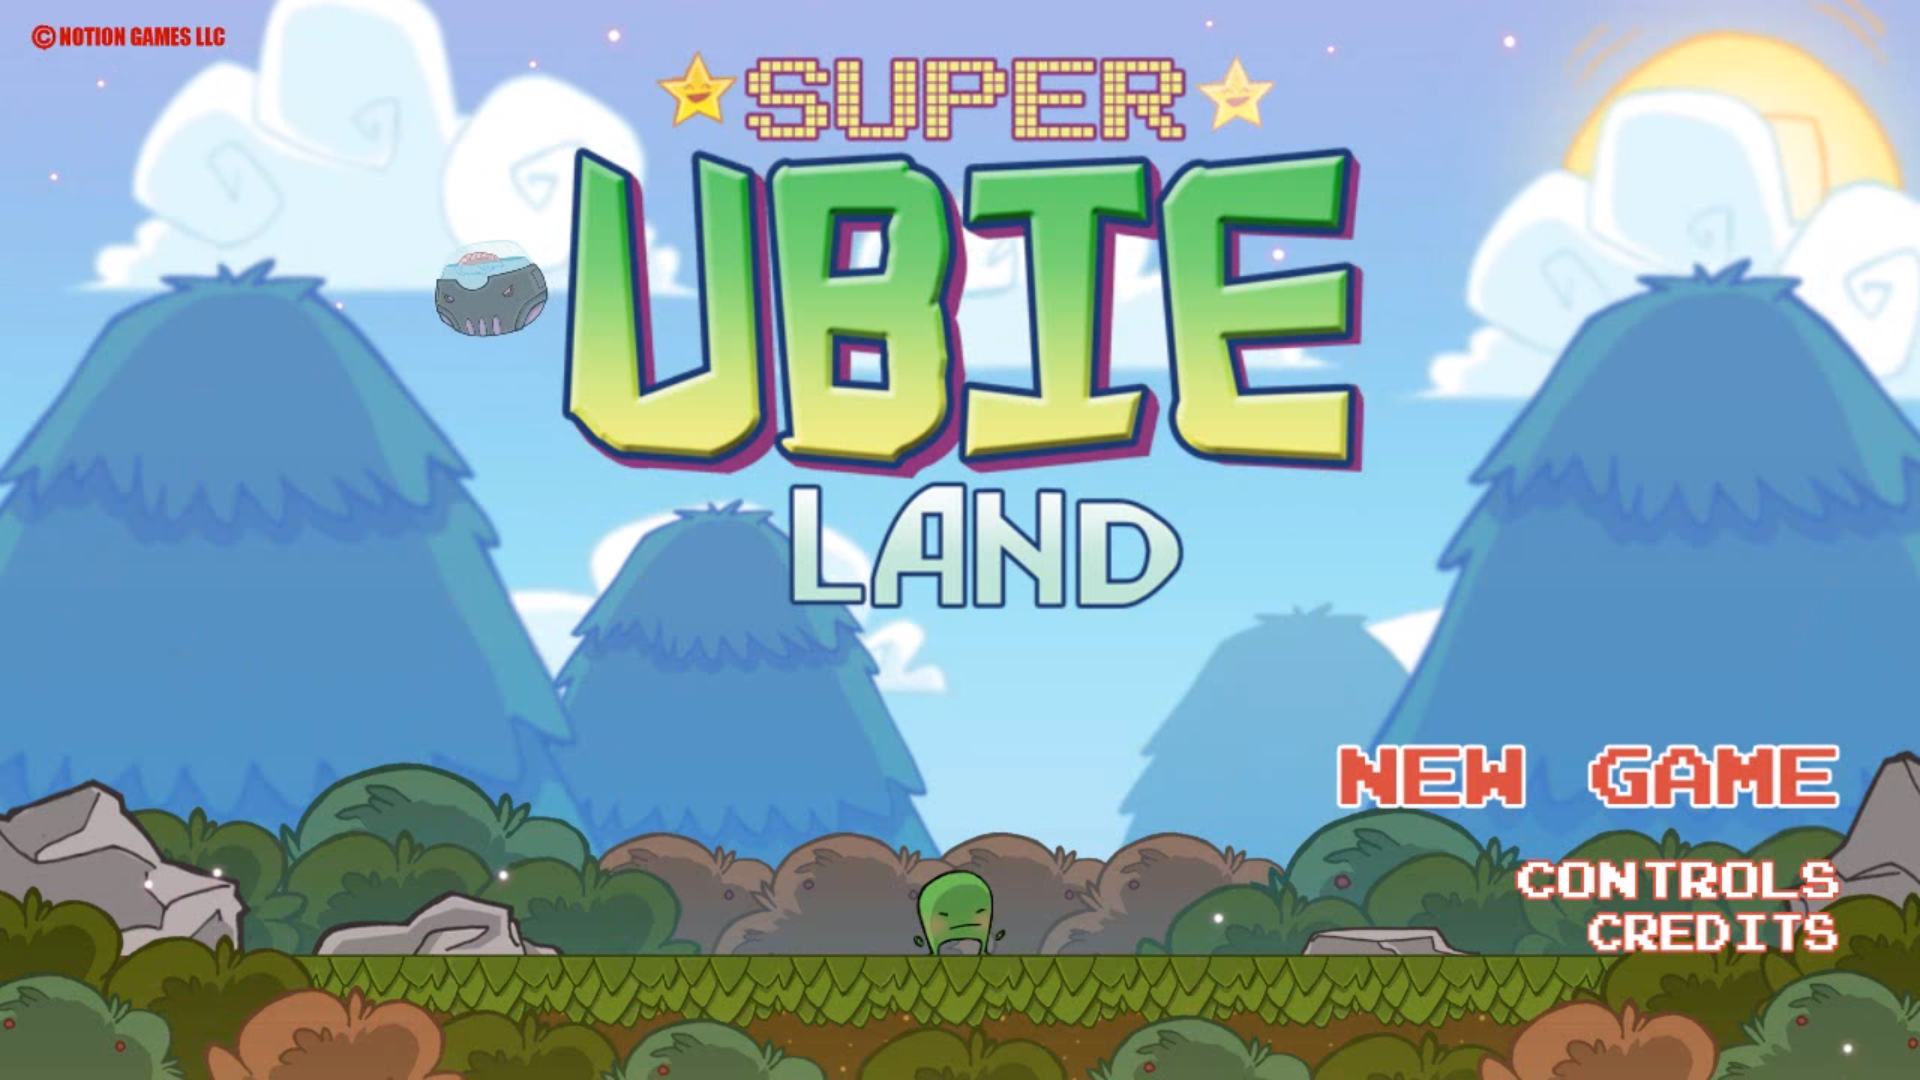 Super Ubie Land Final Trailer